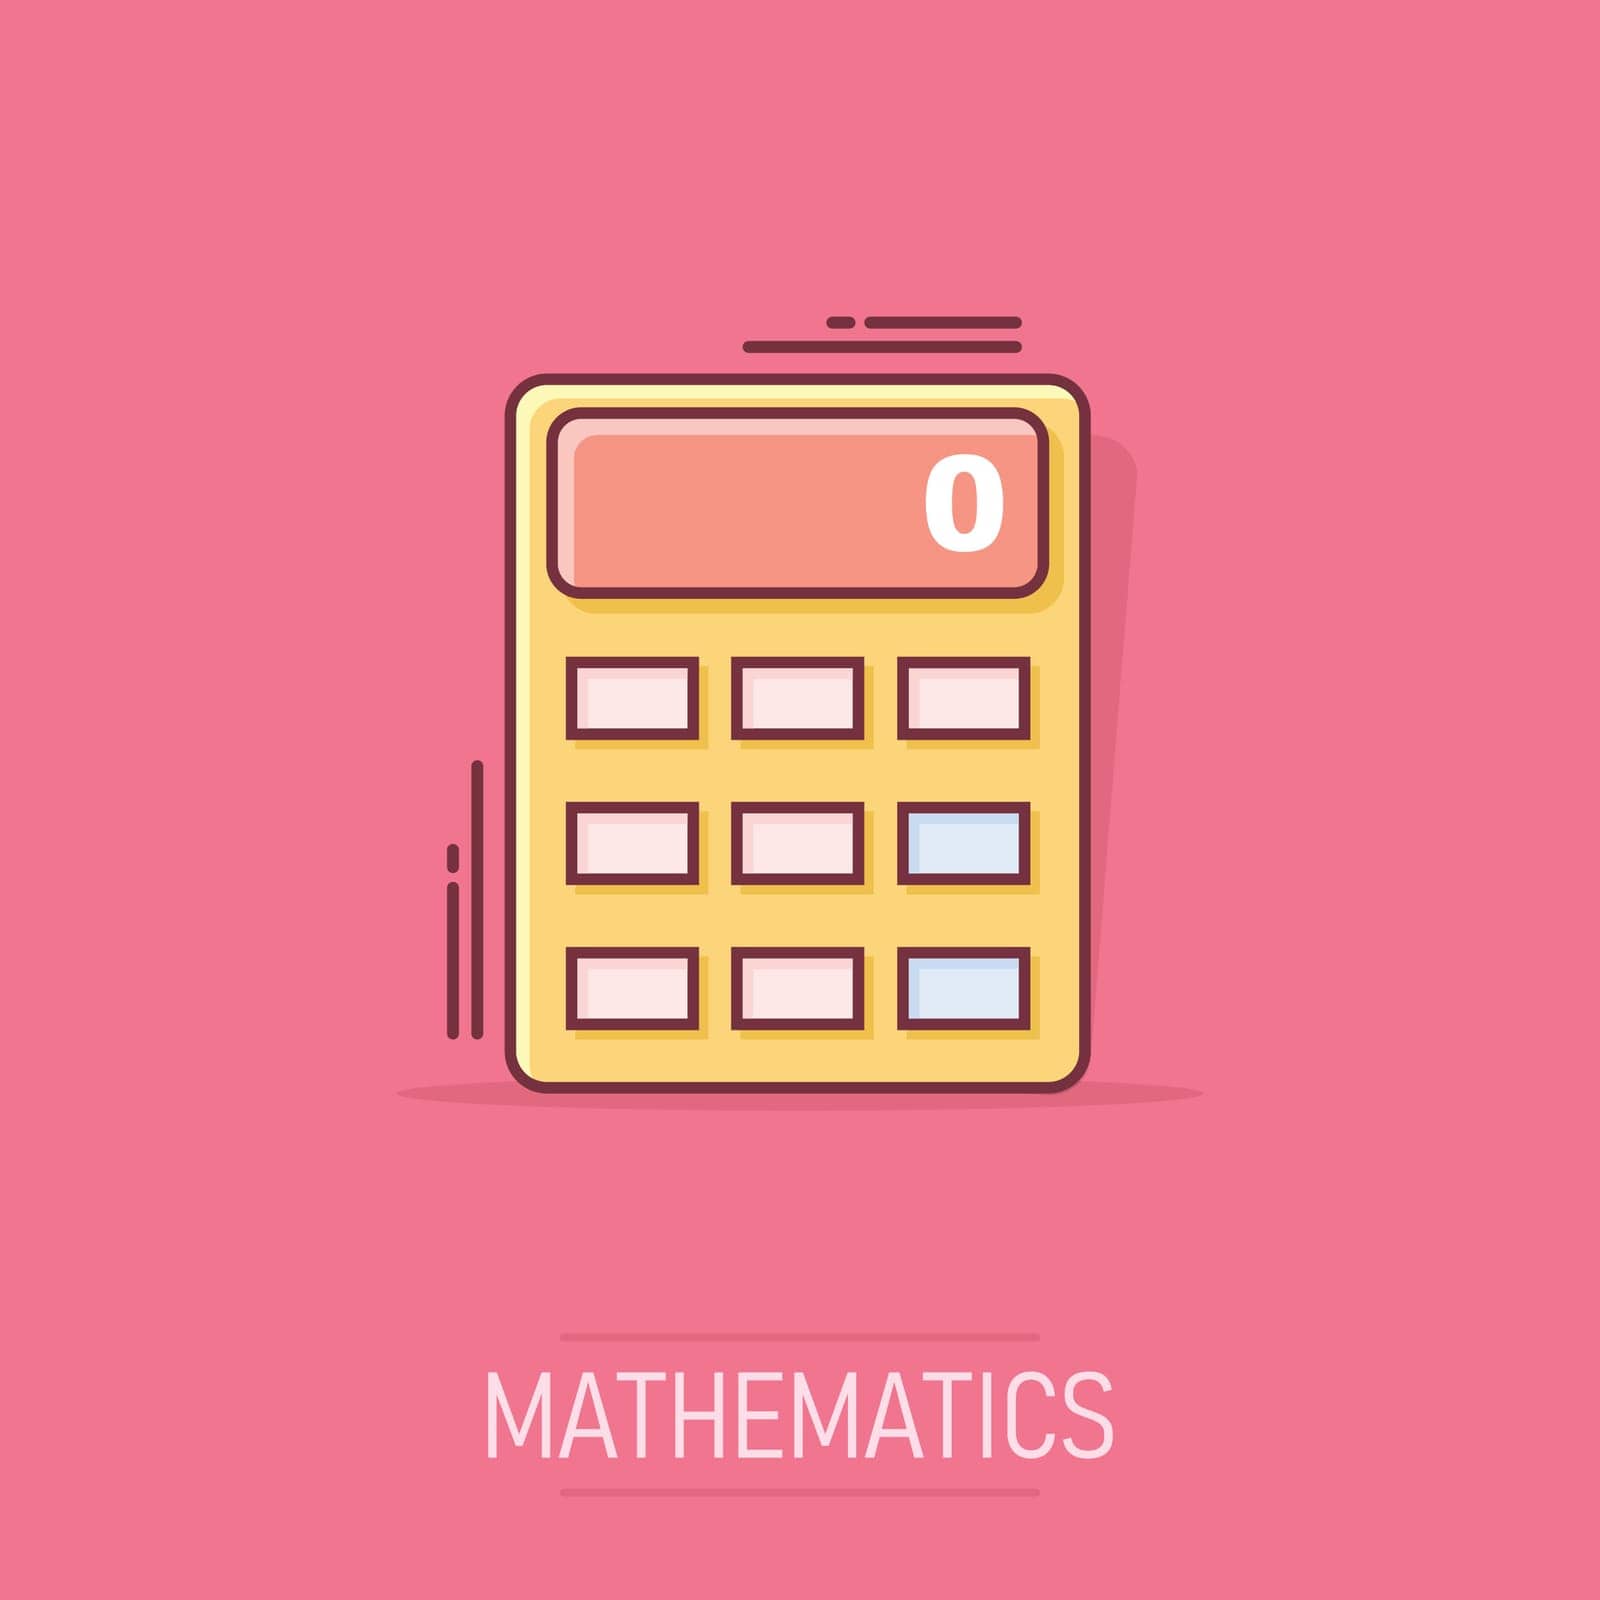 Cartoon calculator icon in comic style. Calculate illustration pictogram. Finance sign splash business concept.